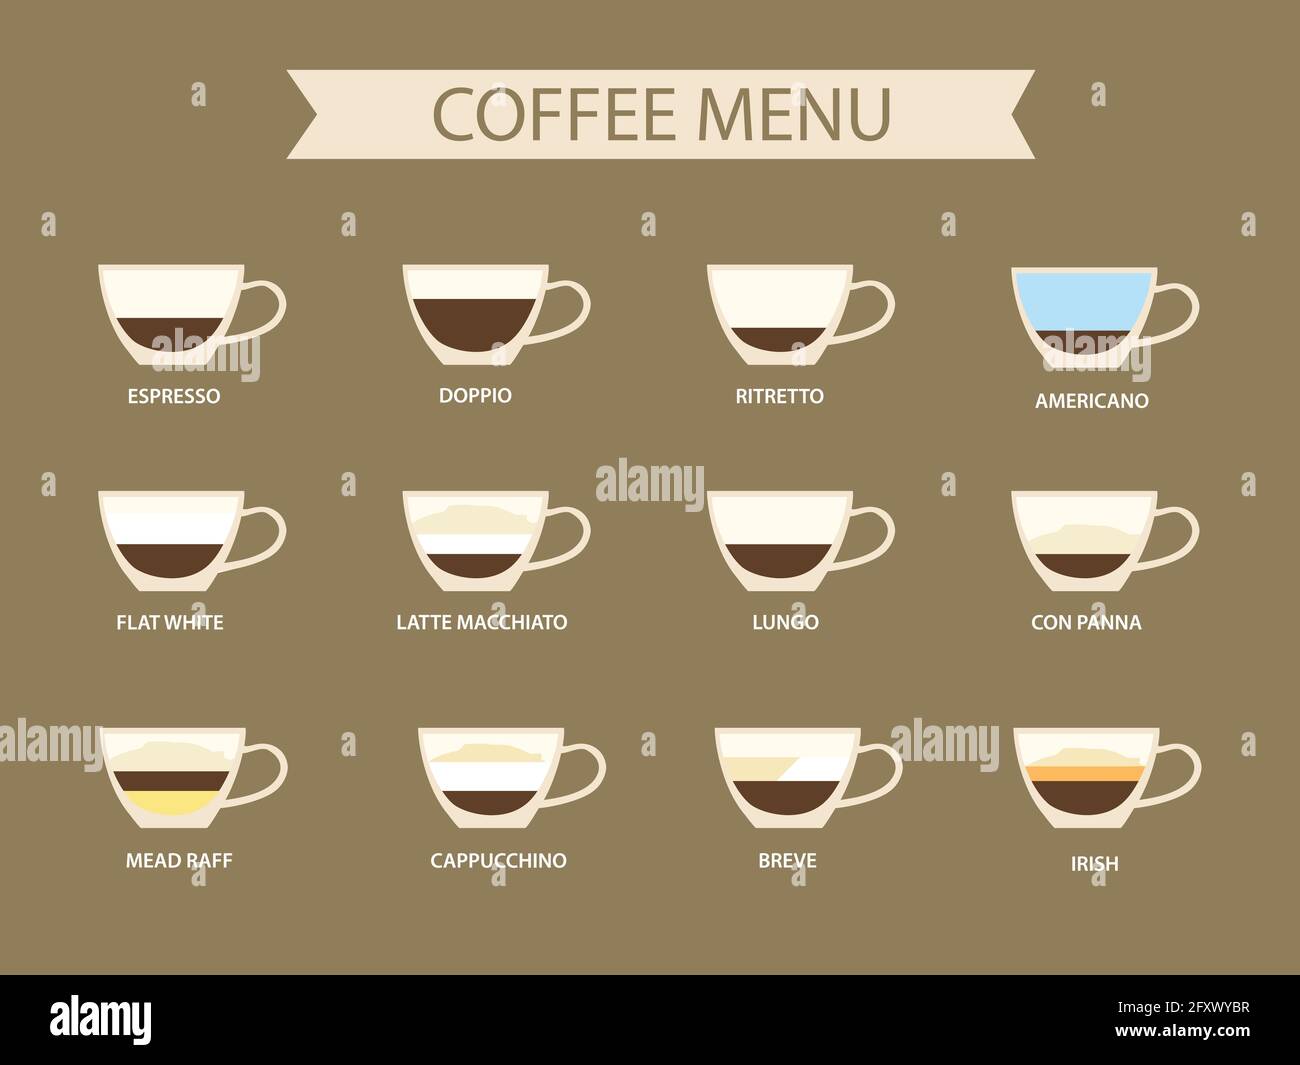 Types of coffee vector illustration. Infographic of coffee types and their preparation. Coffee house menu. Stock Vector